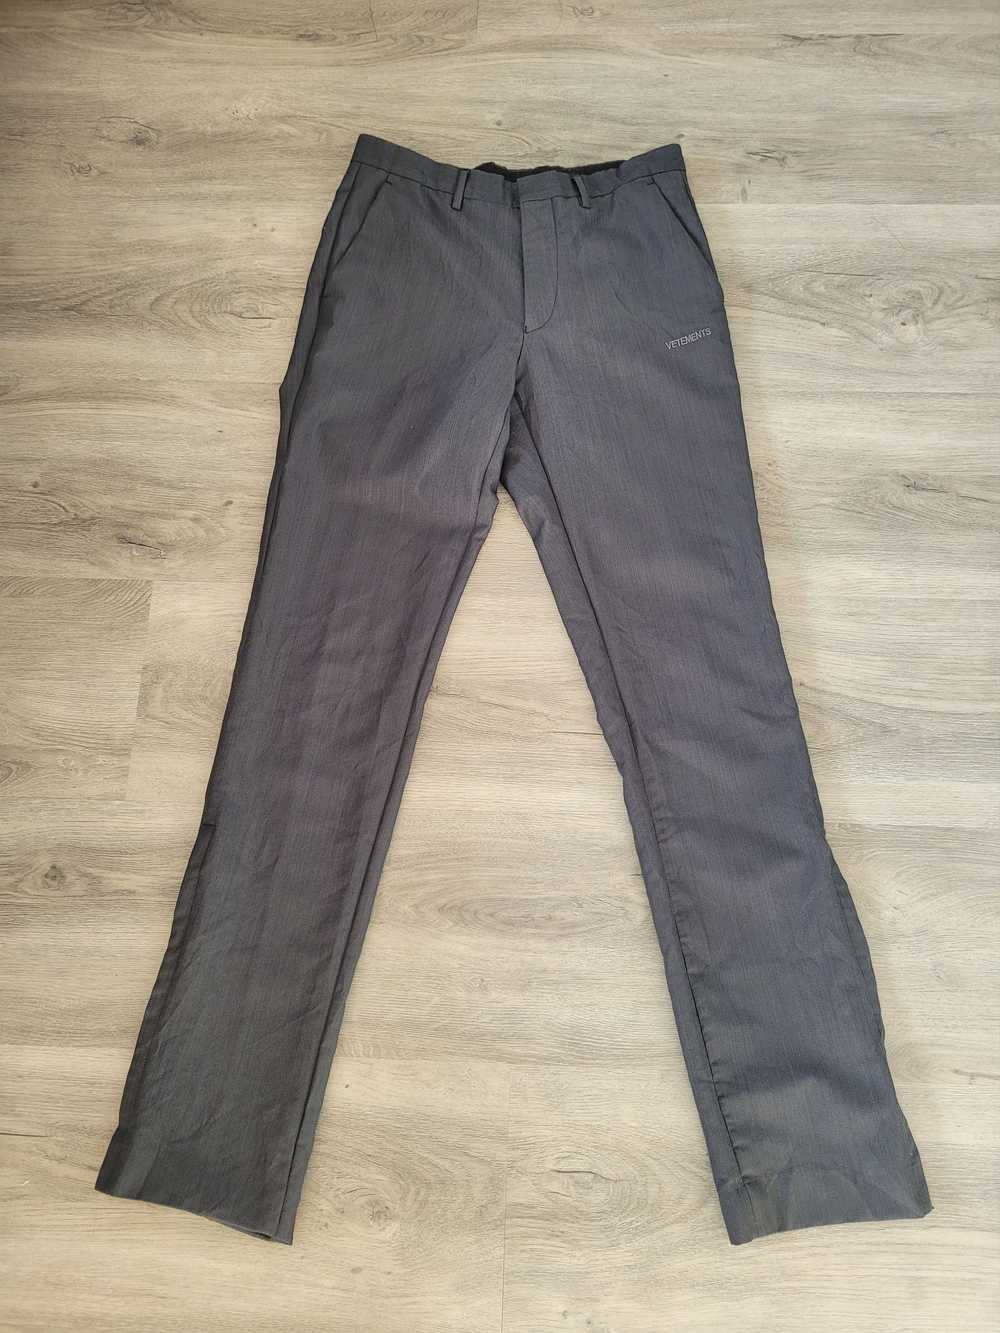 Vetements FW19 Woven Suit Trousers - image 1